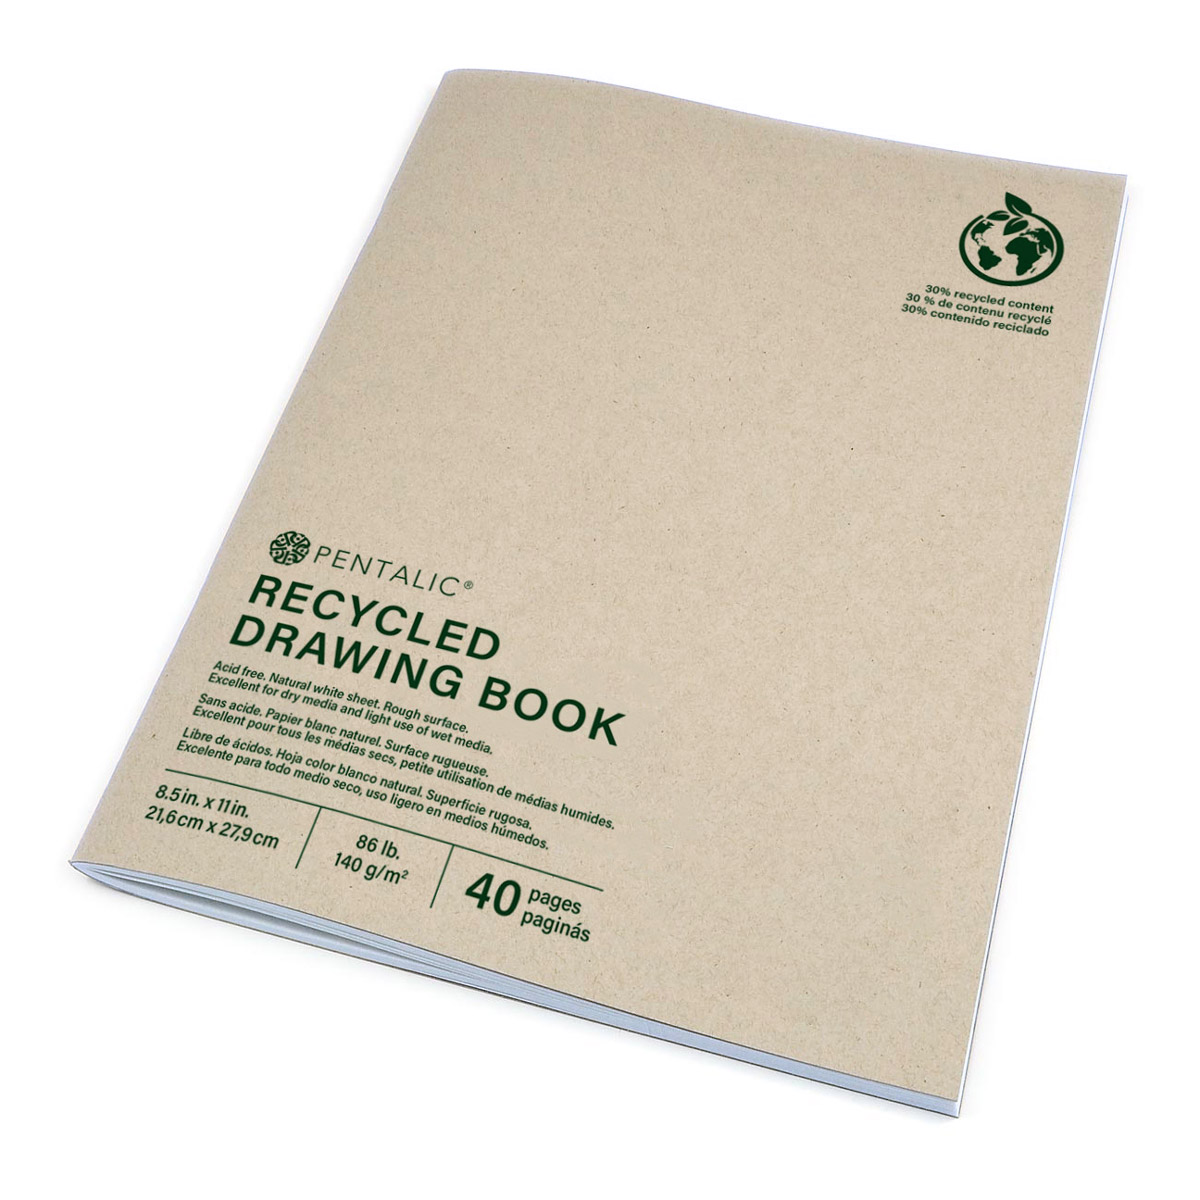 Pentalic Recycled Traveler Sketchbooks